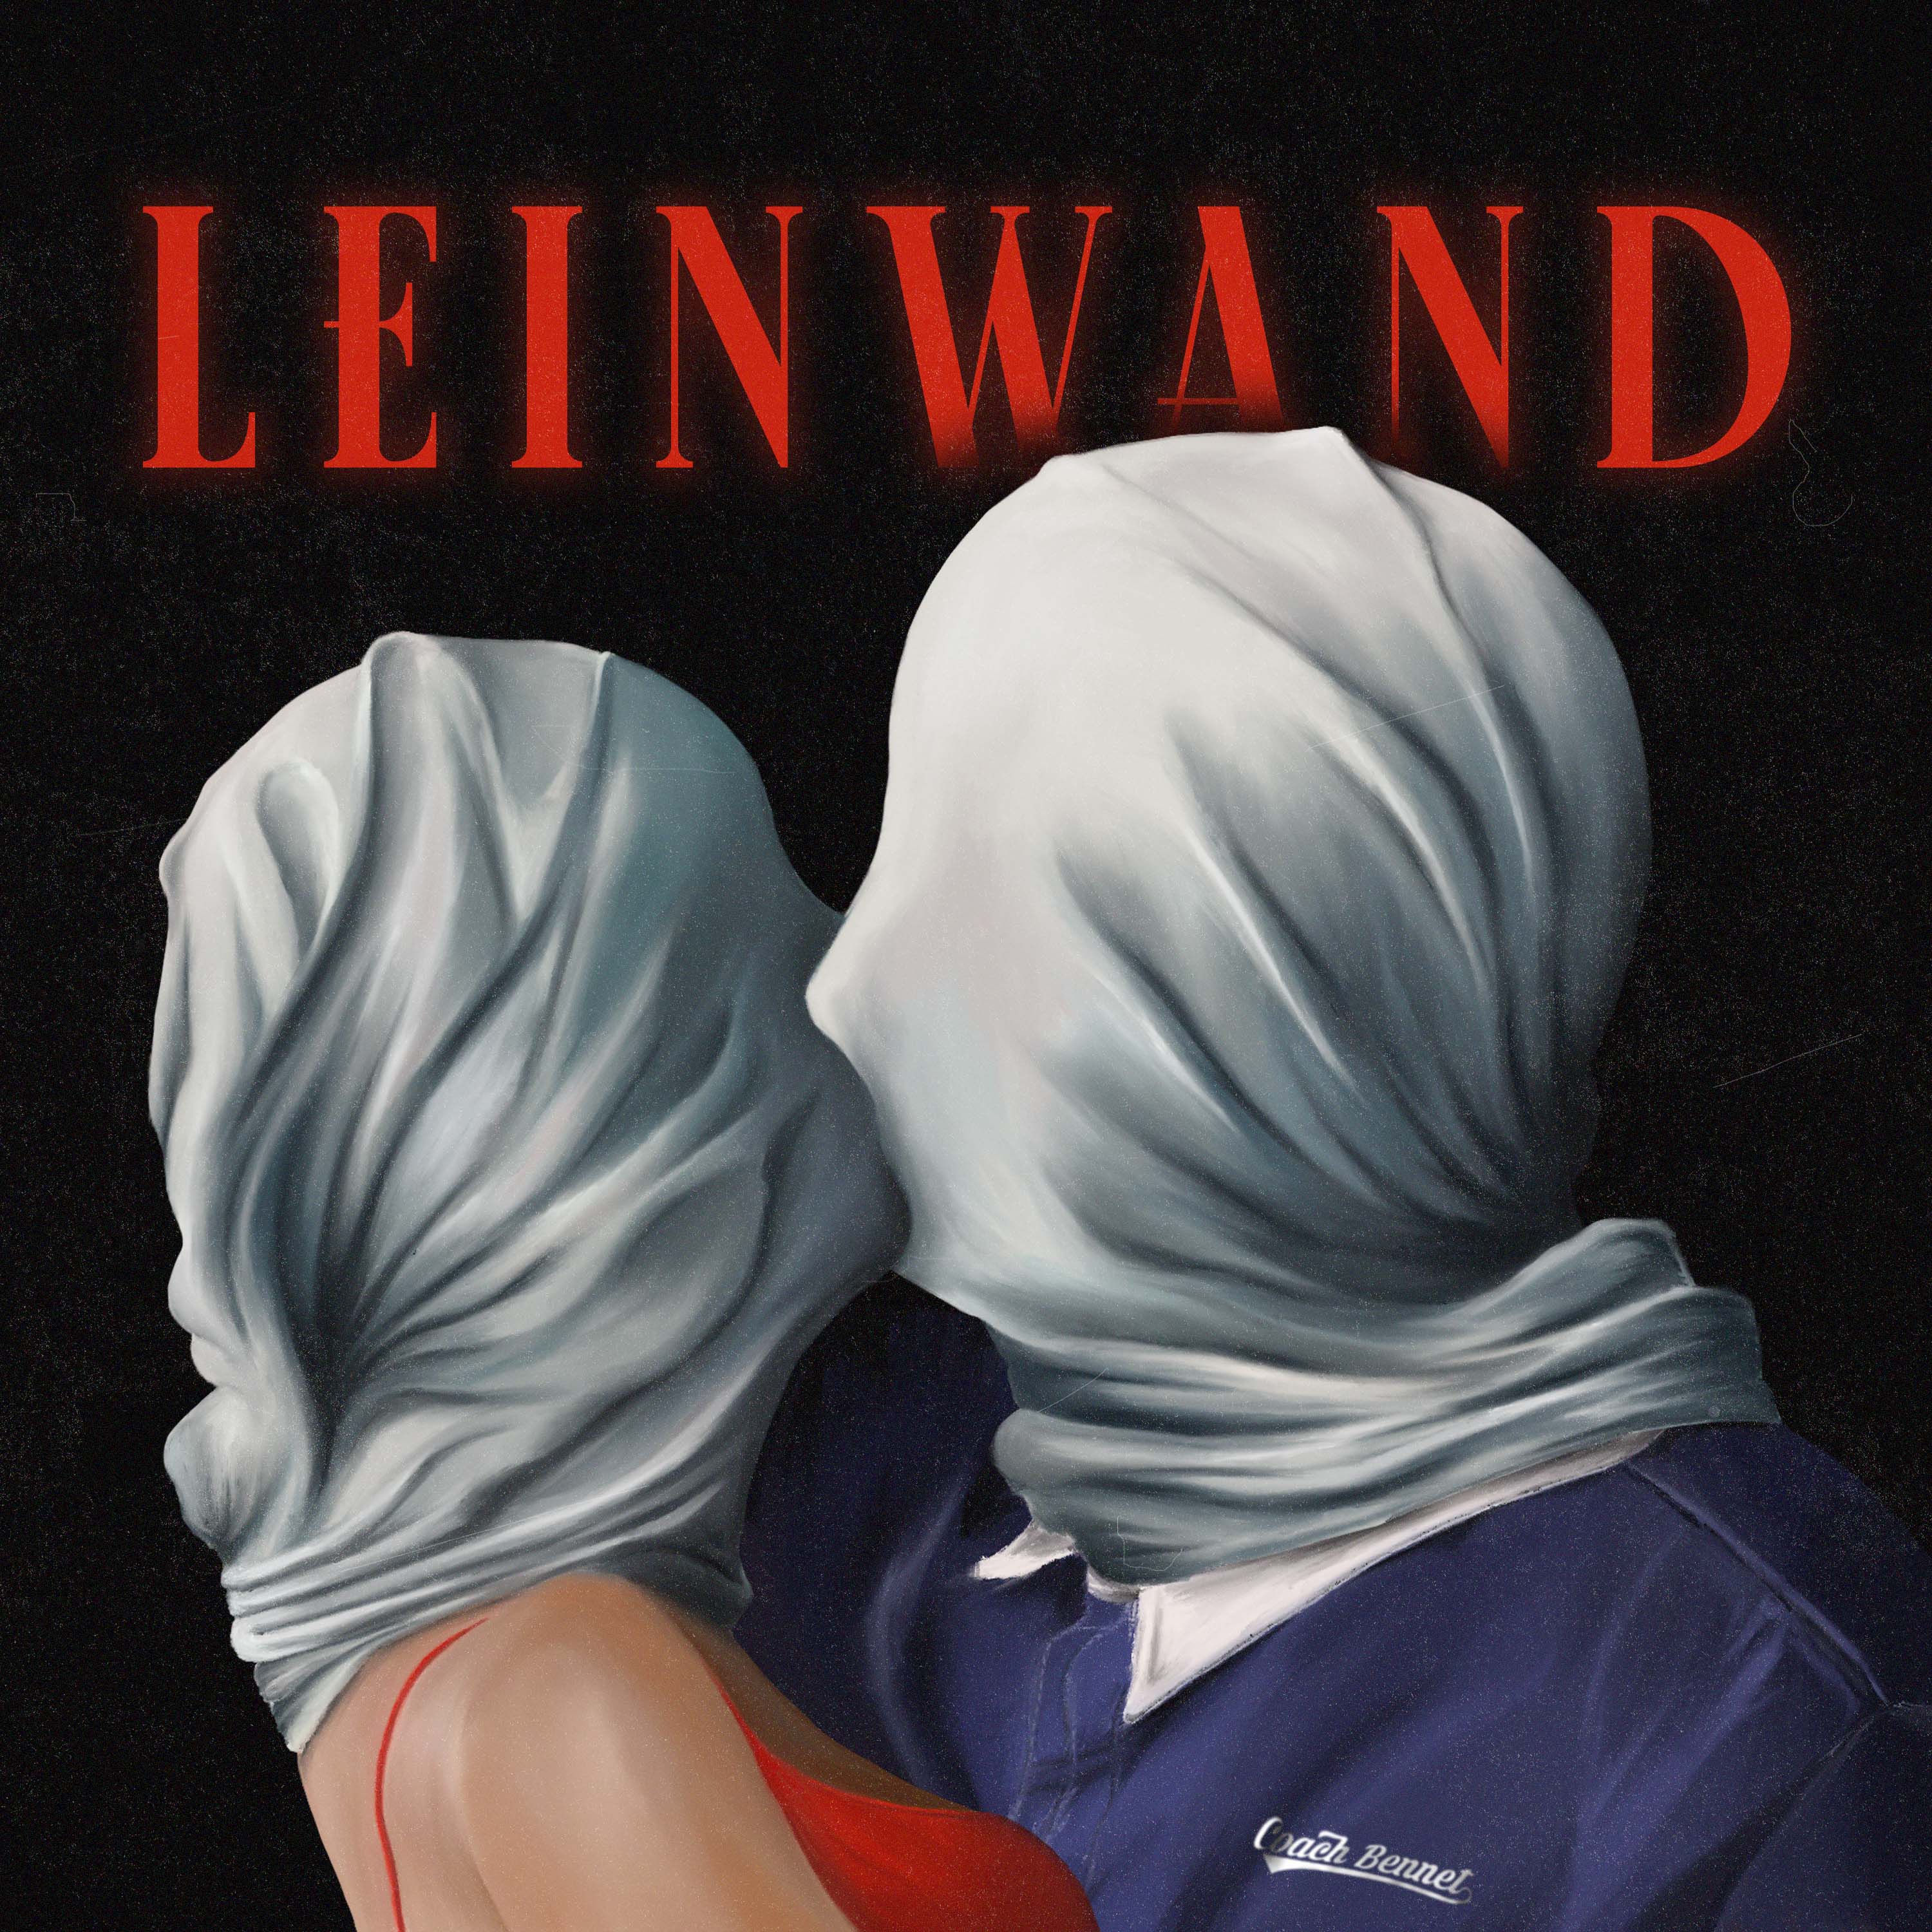 Leinwand (Single)